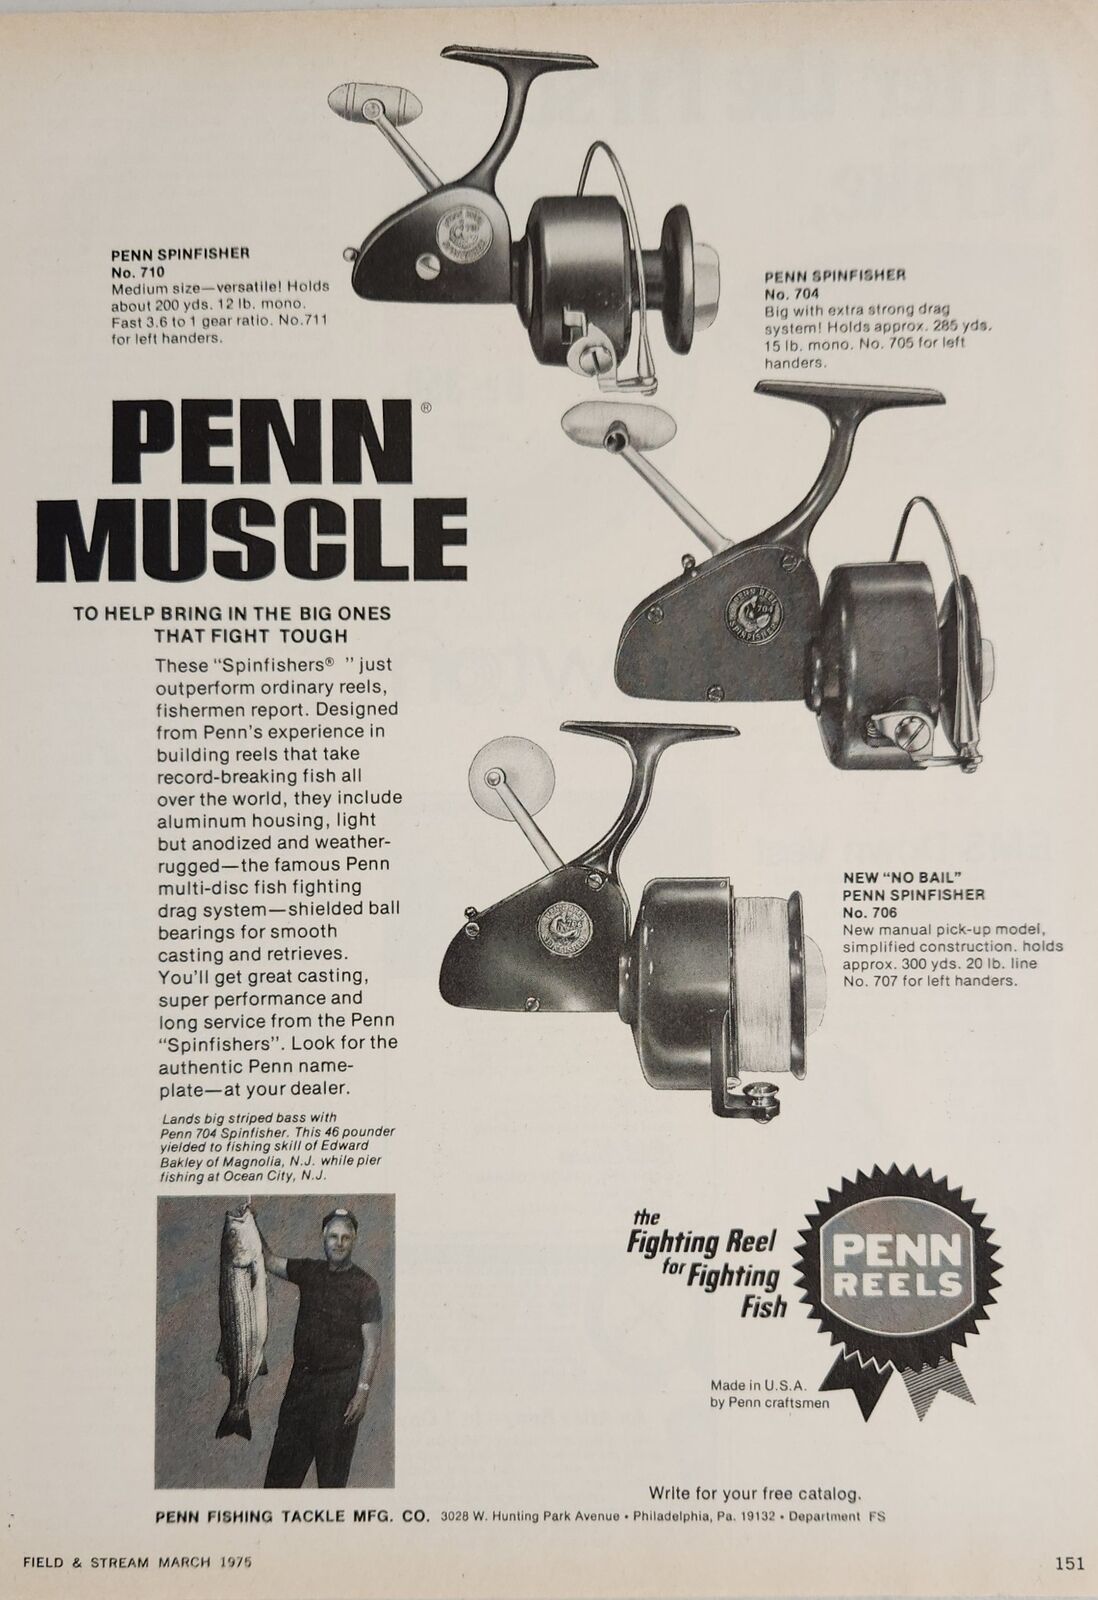 1975 Print Ad Penn Spinfisher Fishing Reels 3 Types Shown 46 LB Striped Bass